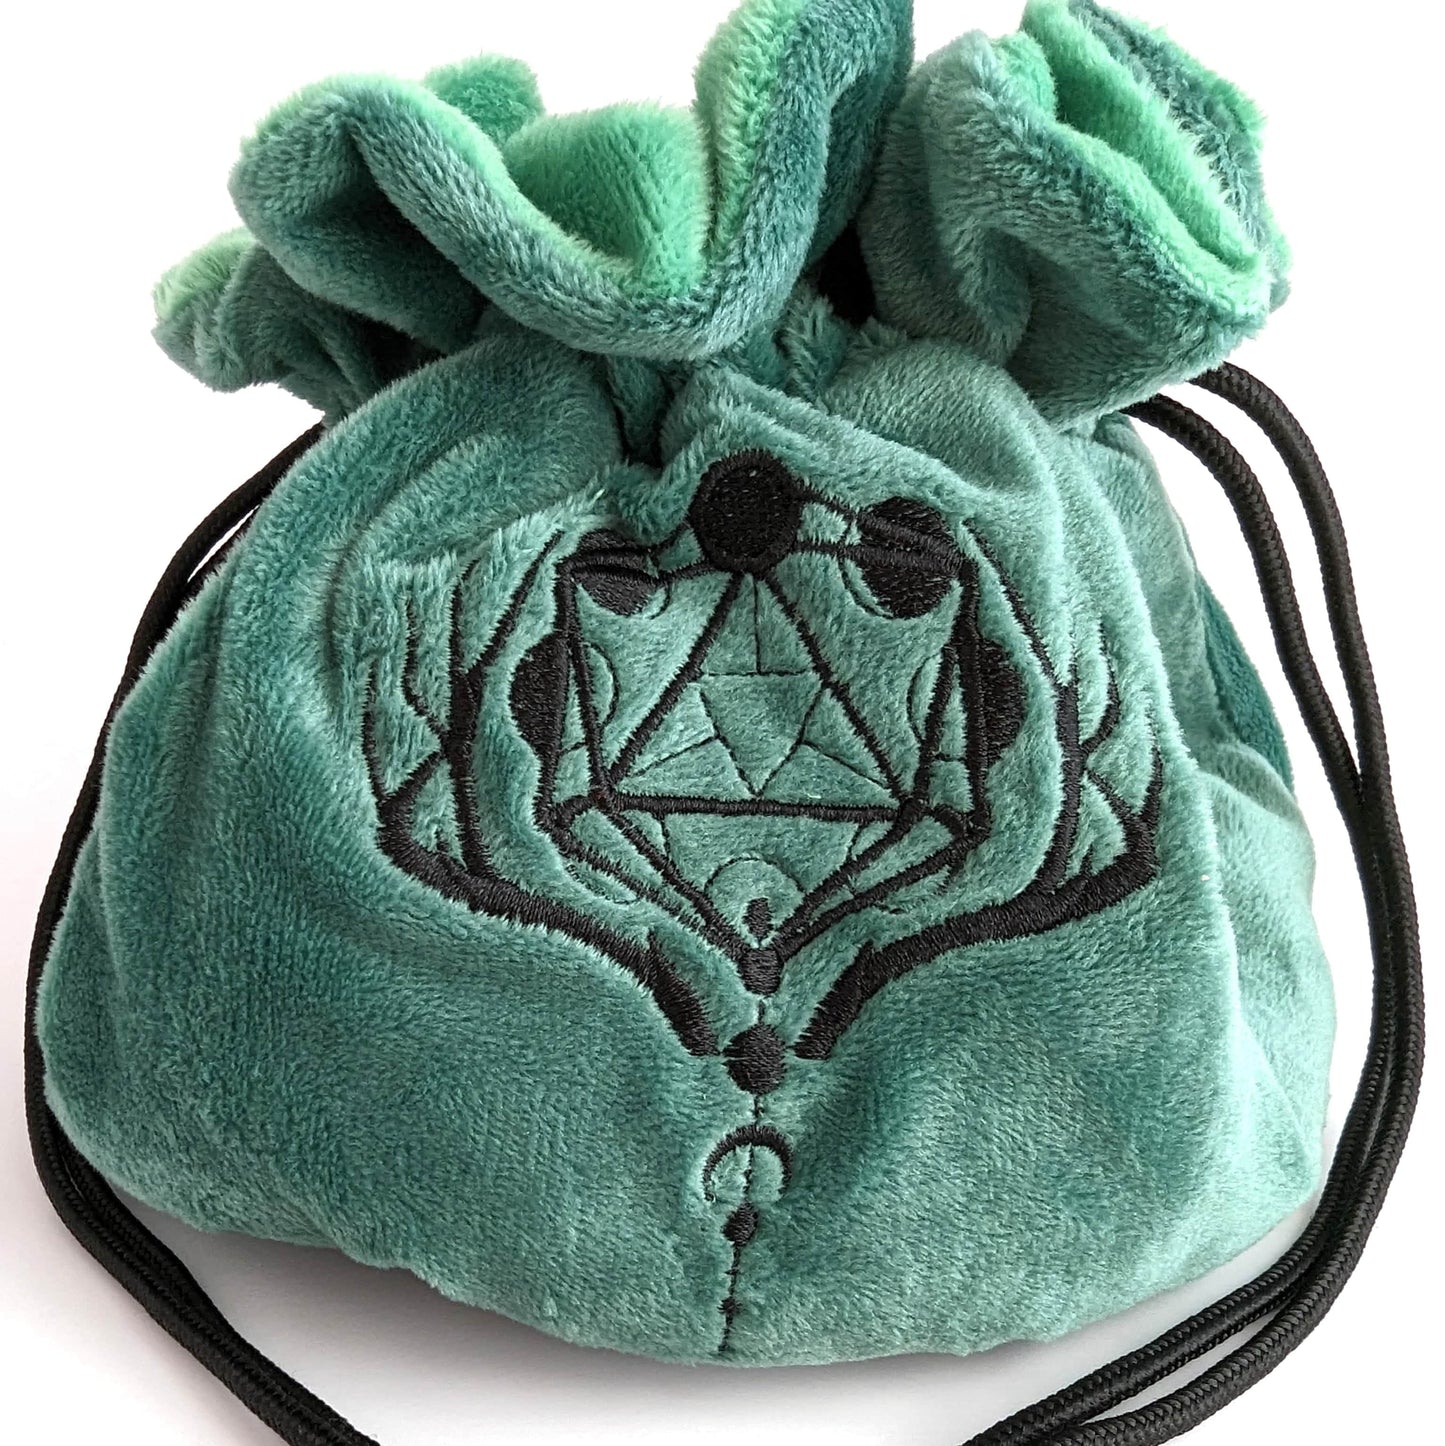 Druid inspired multi pocket large dice bag in green